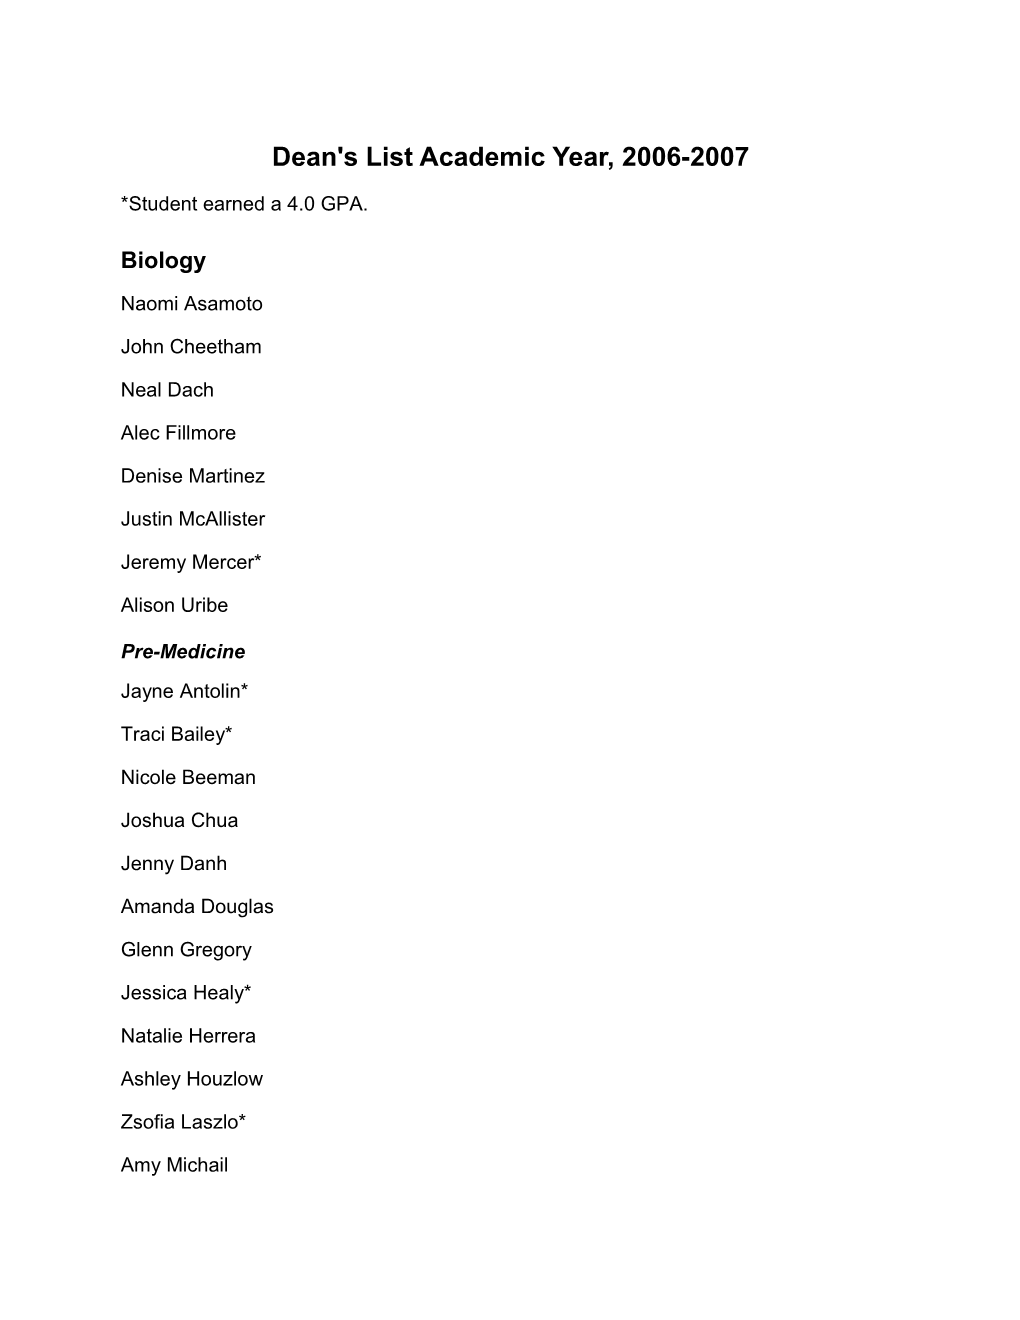 Dean's List Academic Year, 2003-2004